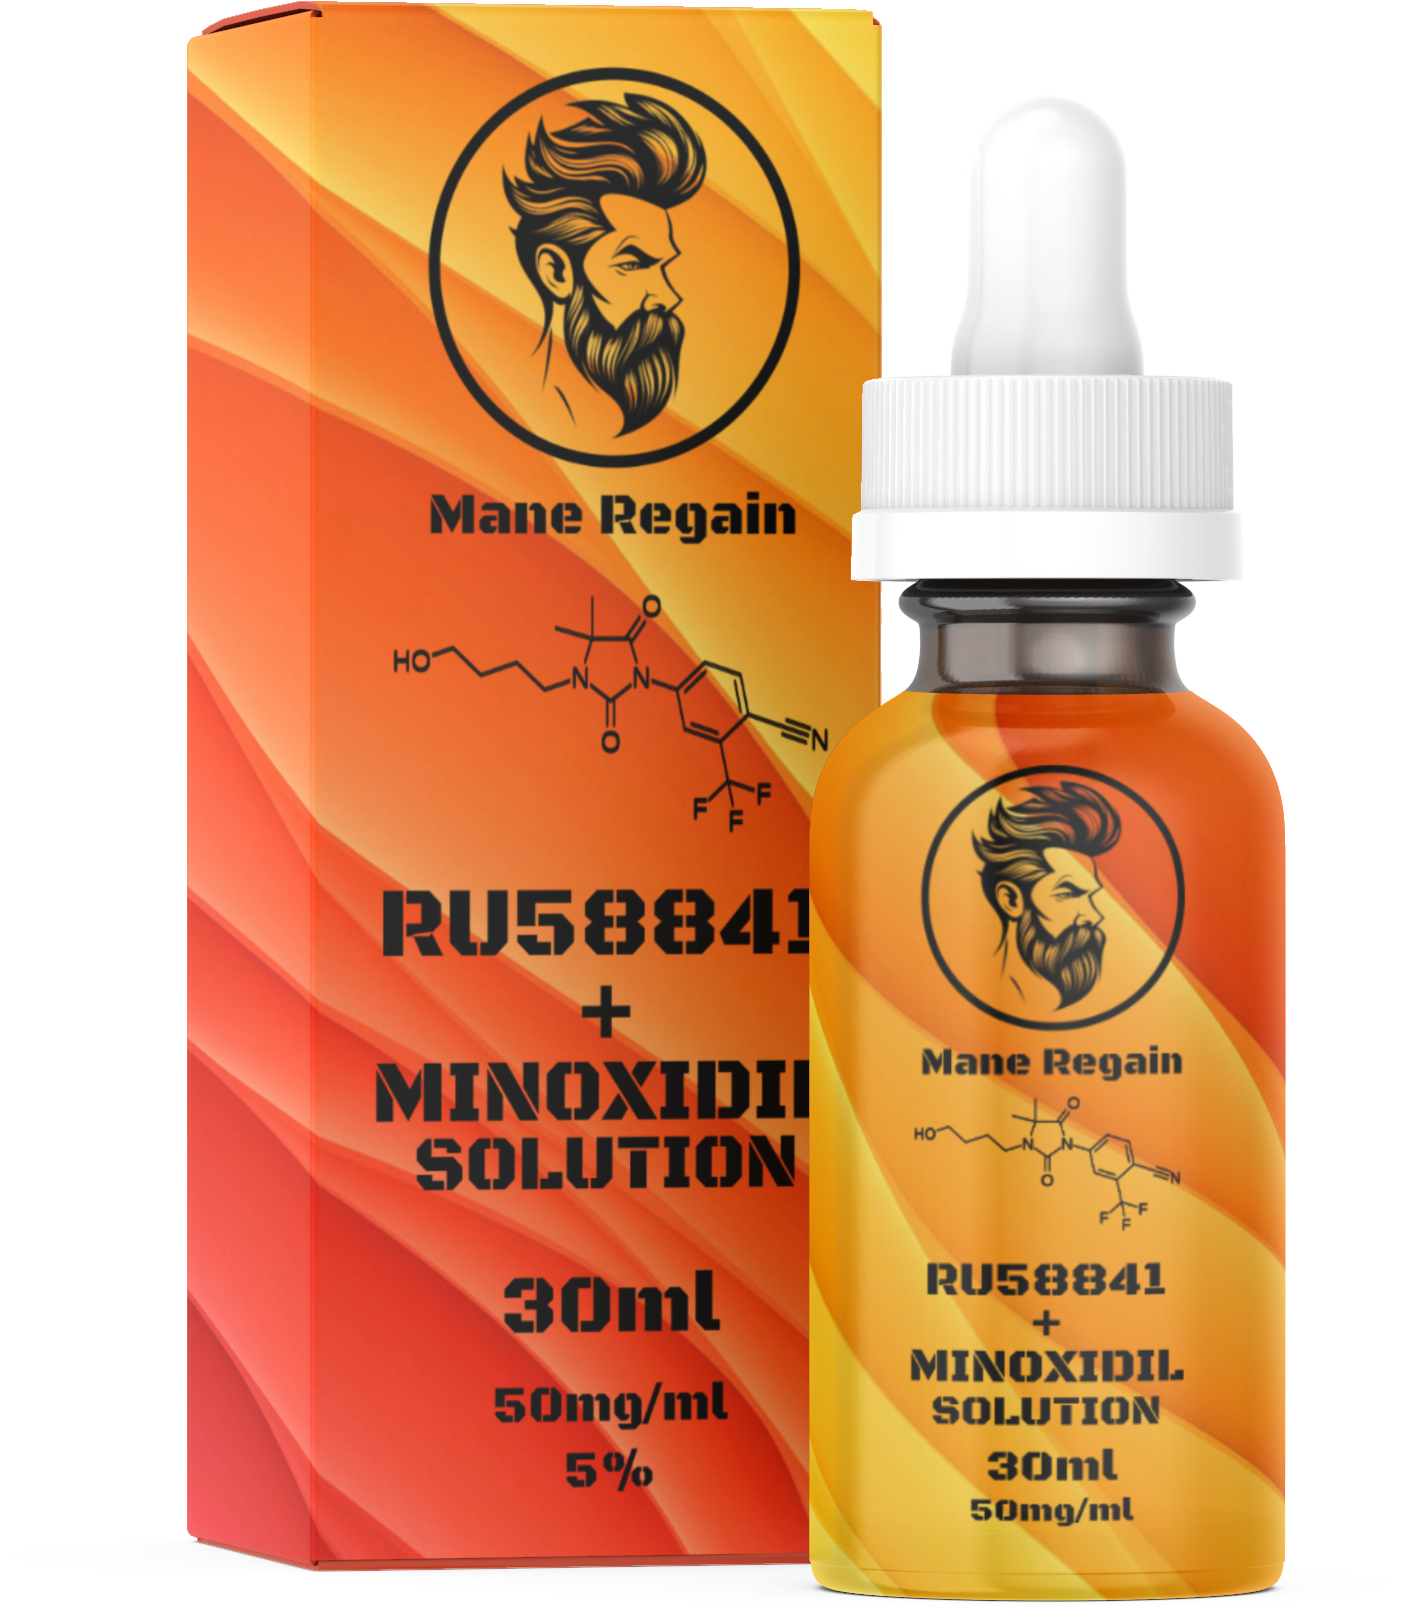 RU58841 + Minoxidil - 5% Solution (50mg/ml) - 30ml Bottle